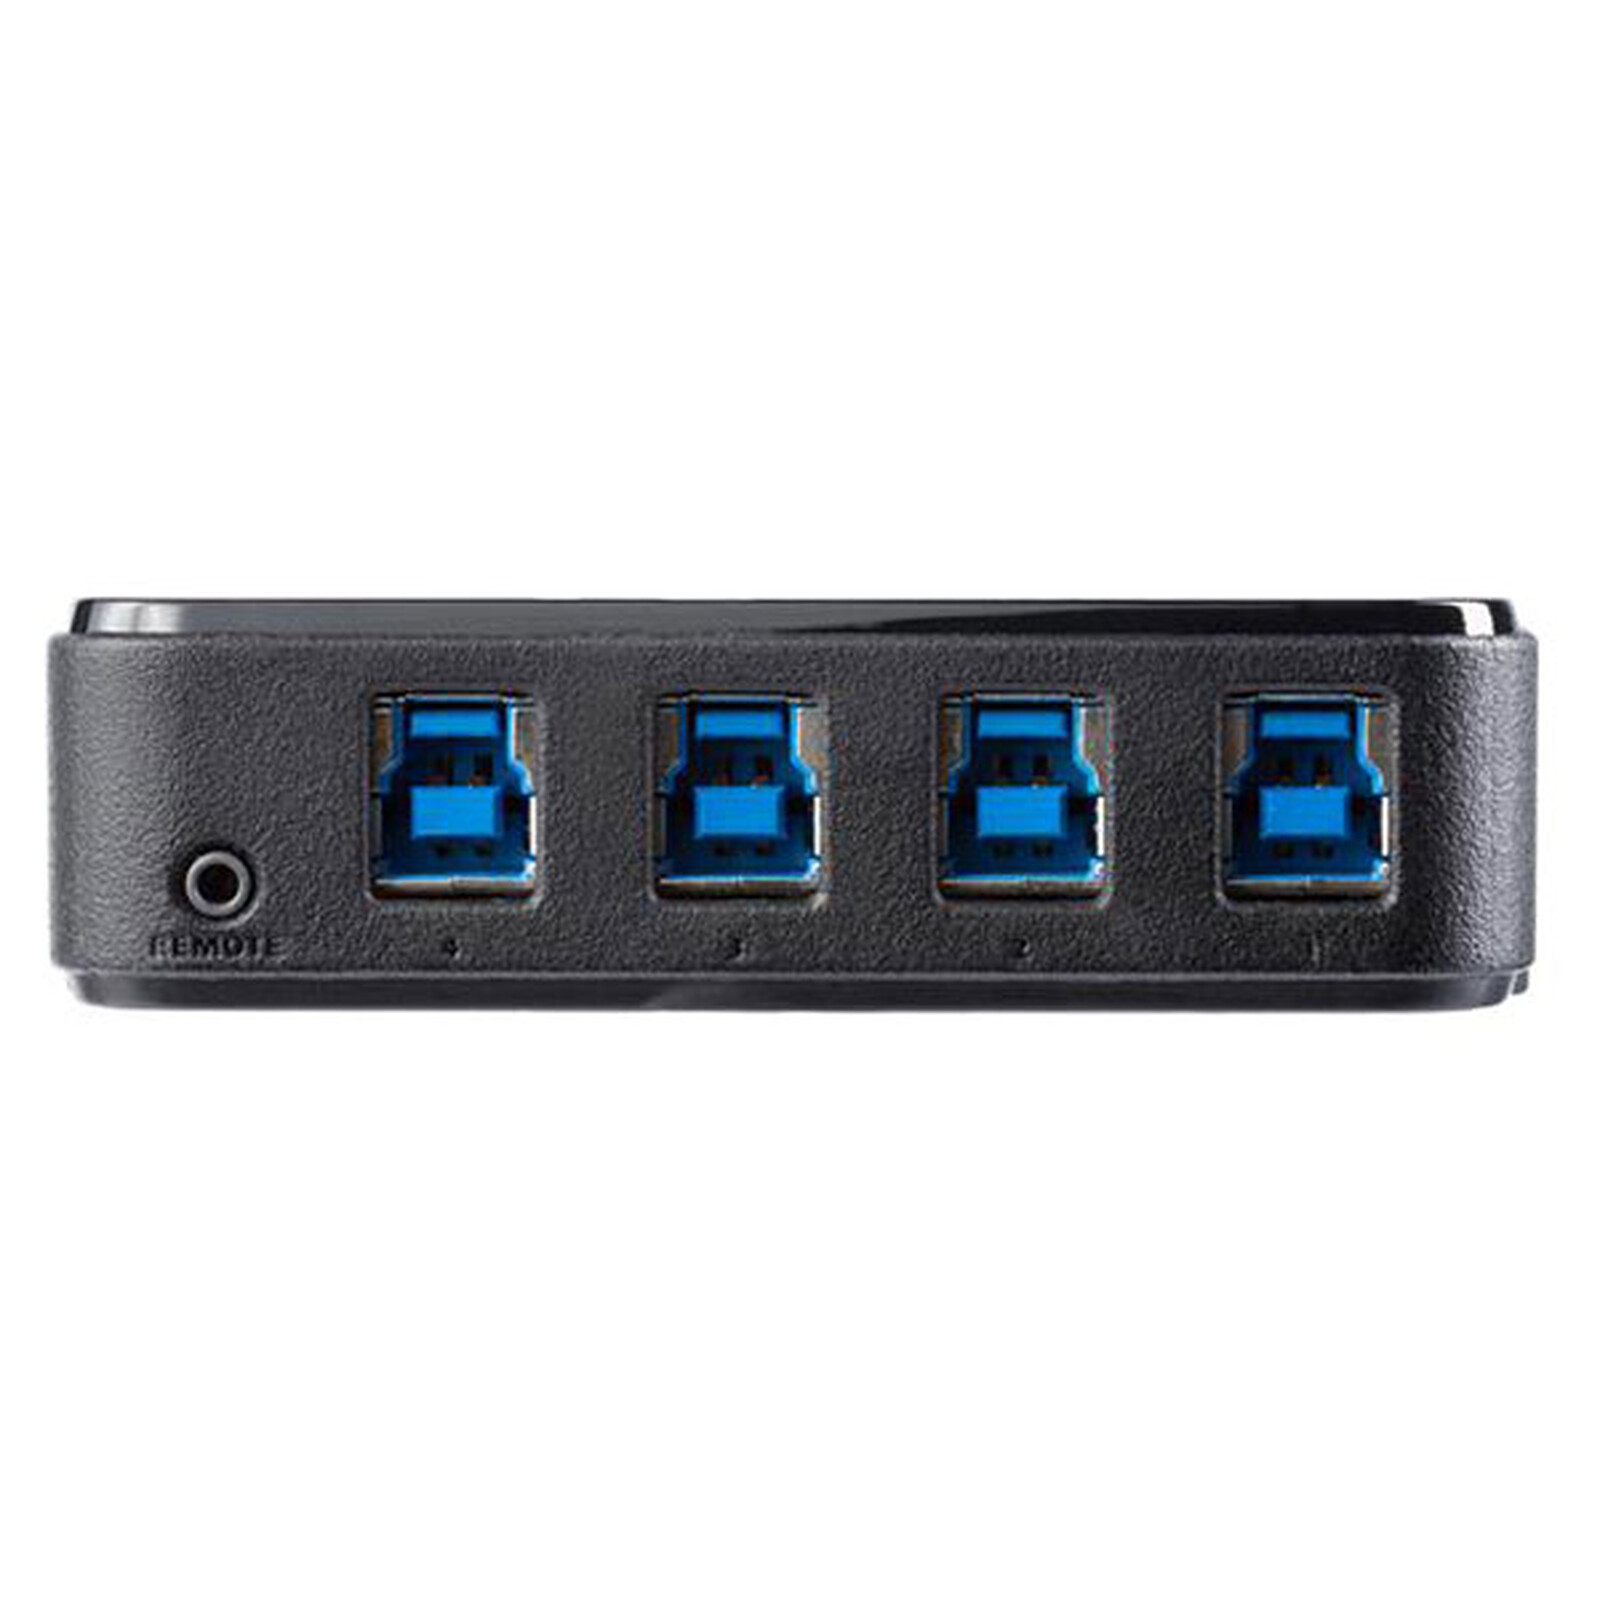 Interruttore Hub USB 3.0 di StarTech.com con 4 ingressi / 4 uscite